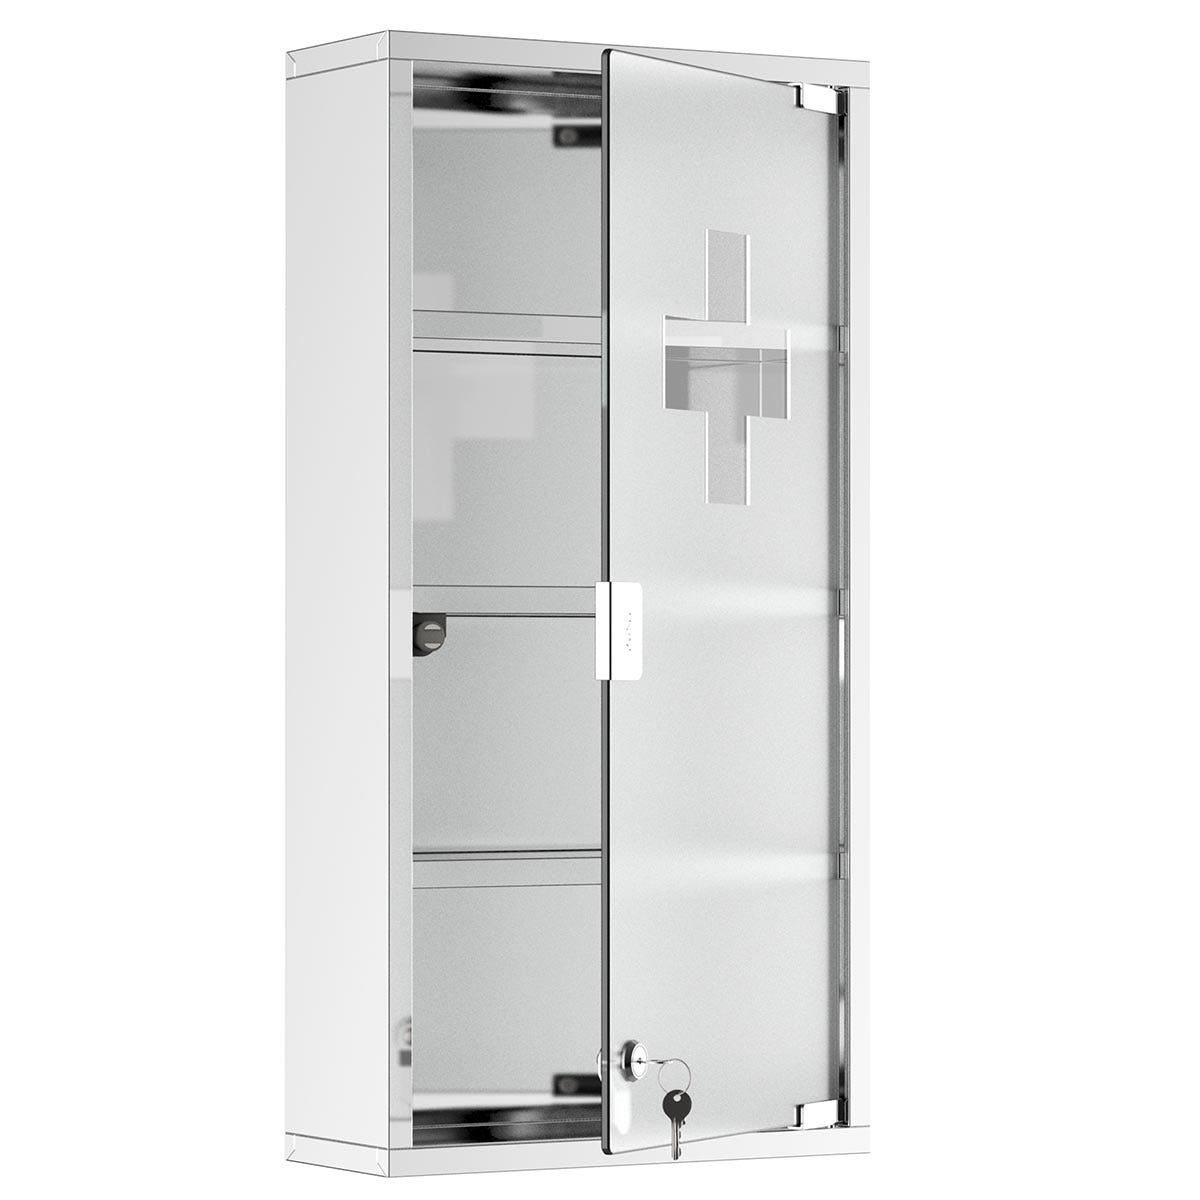 HOMCOM Medicine Cabinet, Stainless Steel With Glass Door - Silver